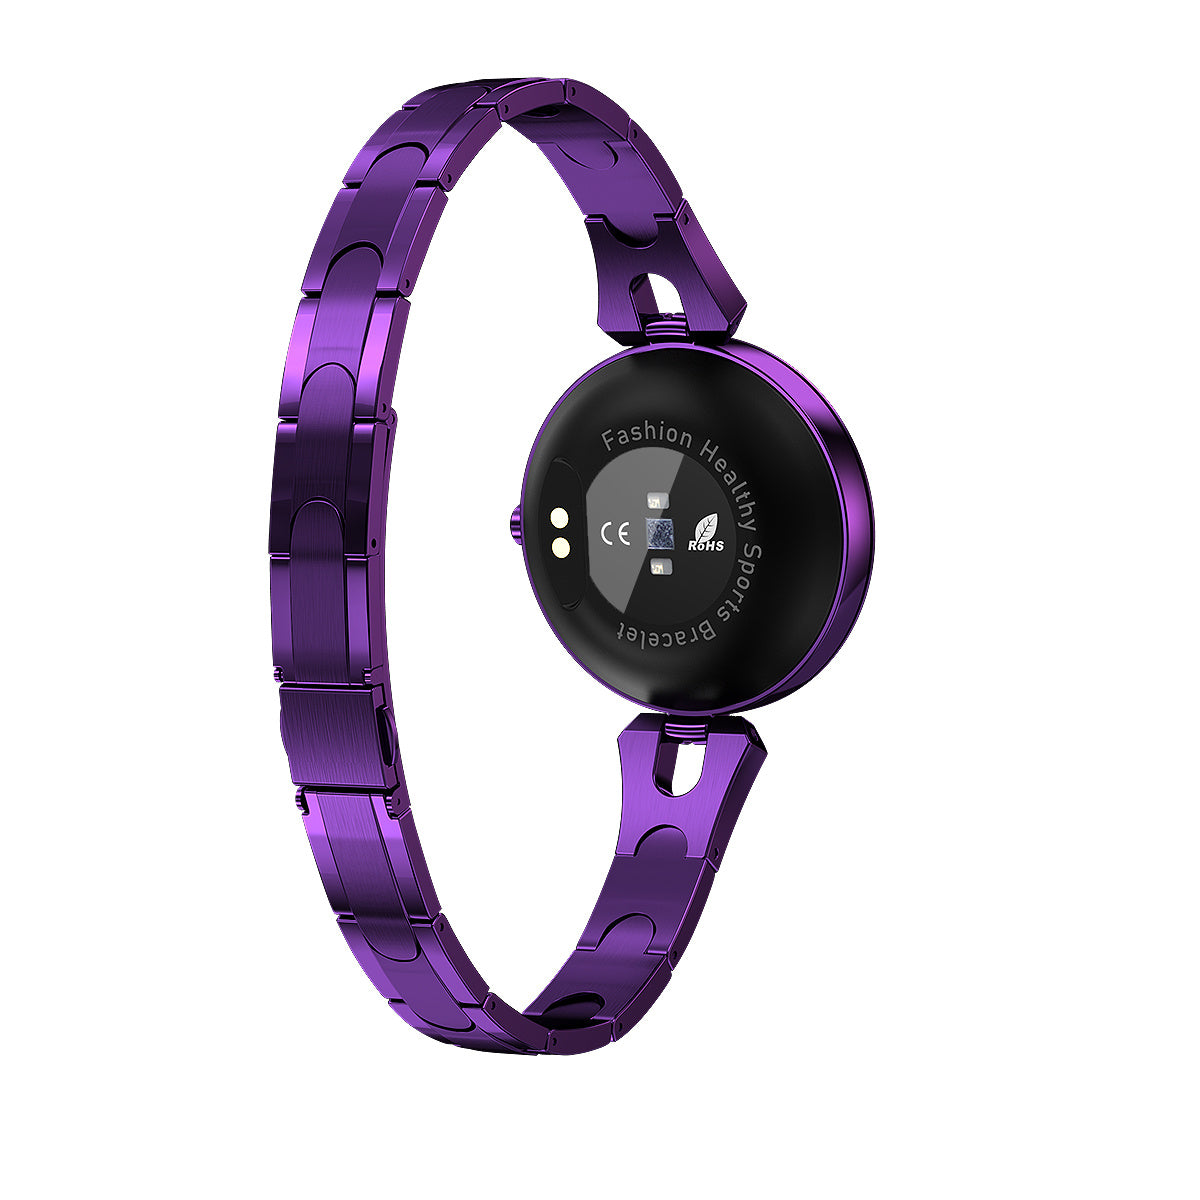 Smart watch Fitness watch with heart rate monitor, blood oxygen saturation, waterproof smart watch